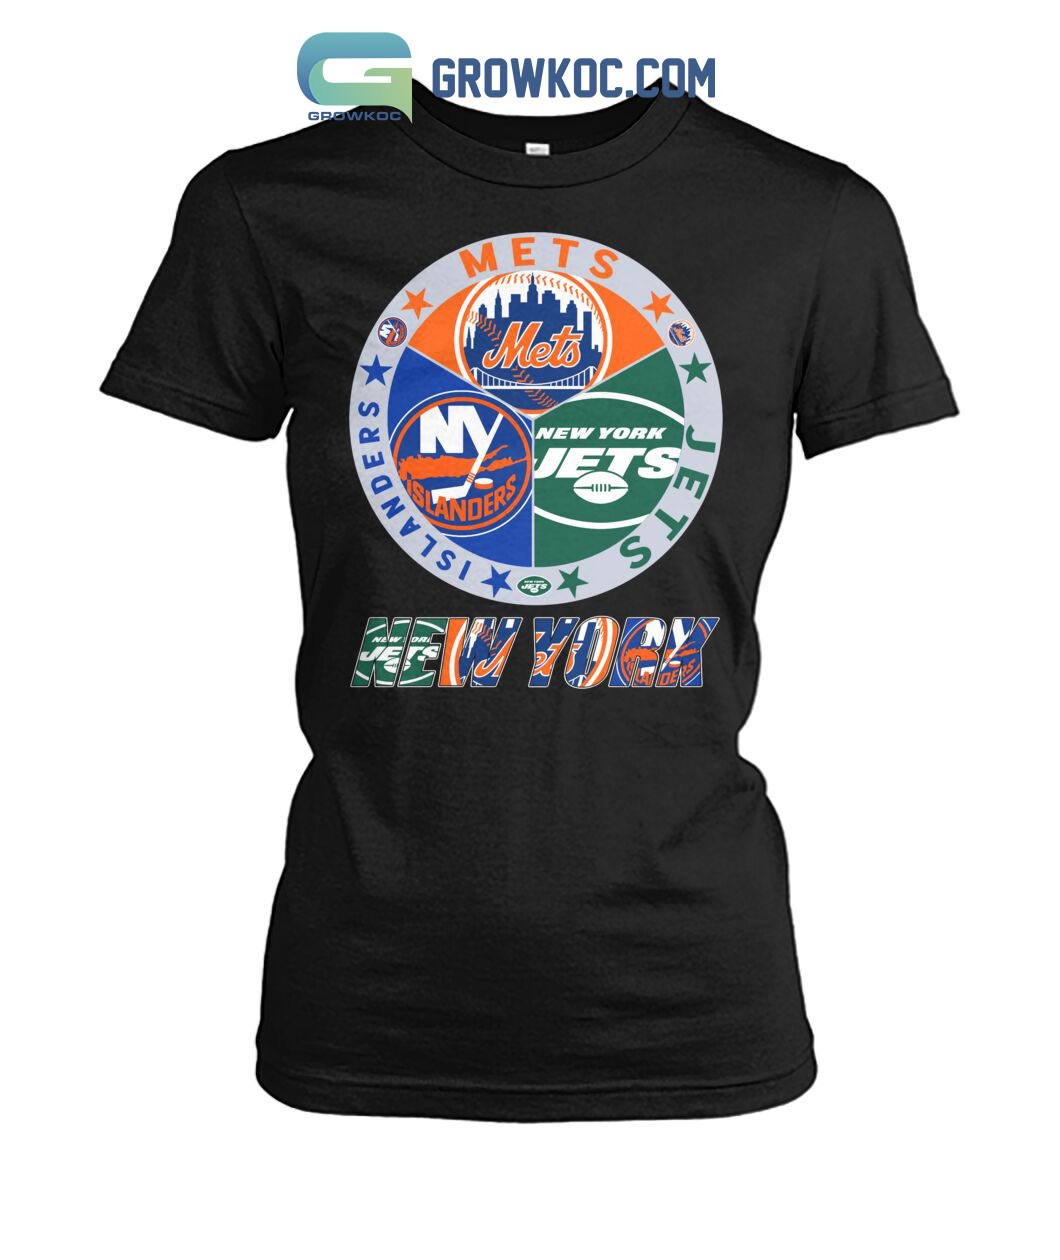 New York Mets Jets Islanders T Shirt